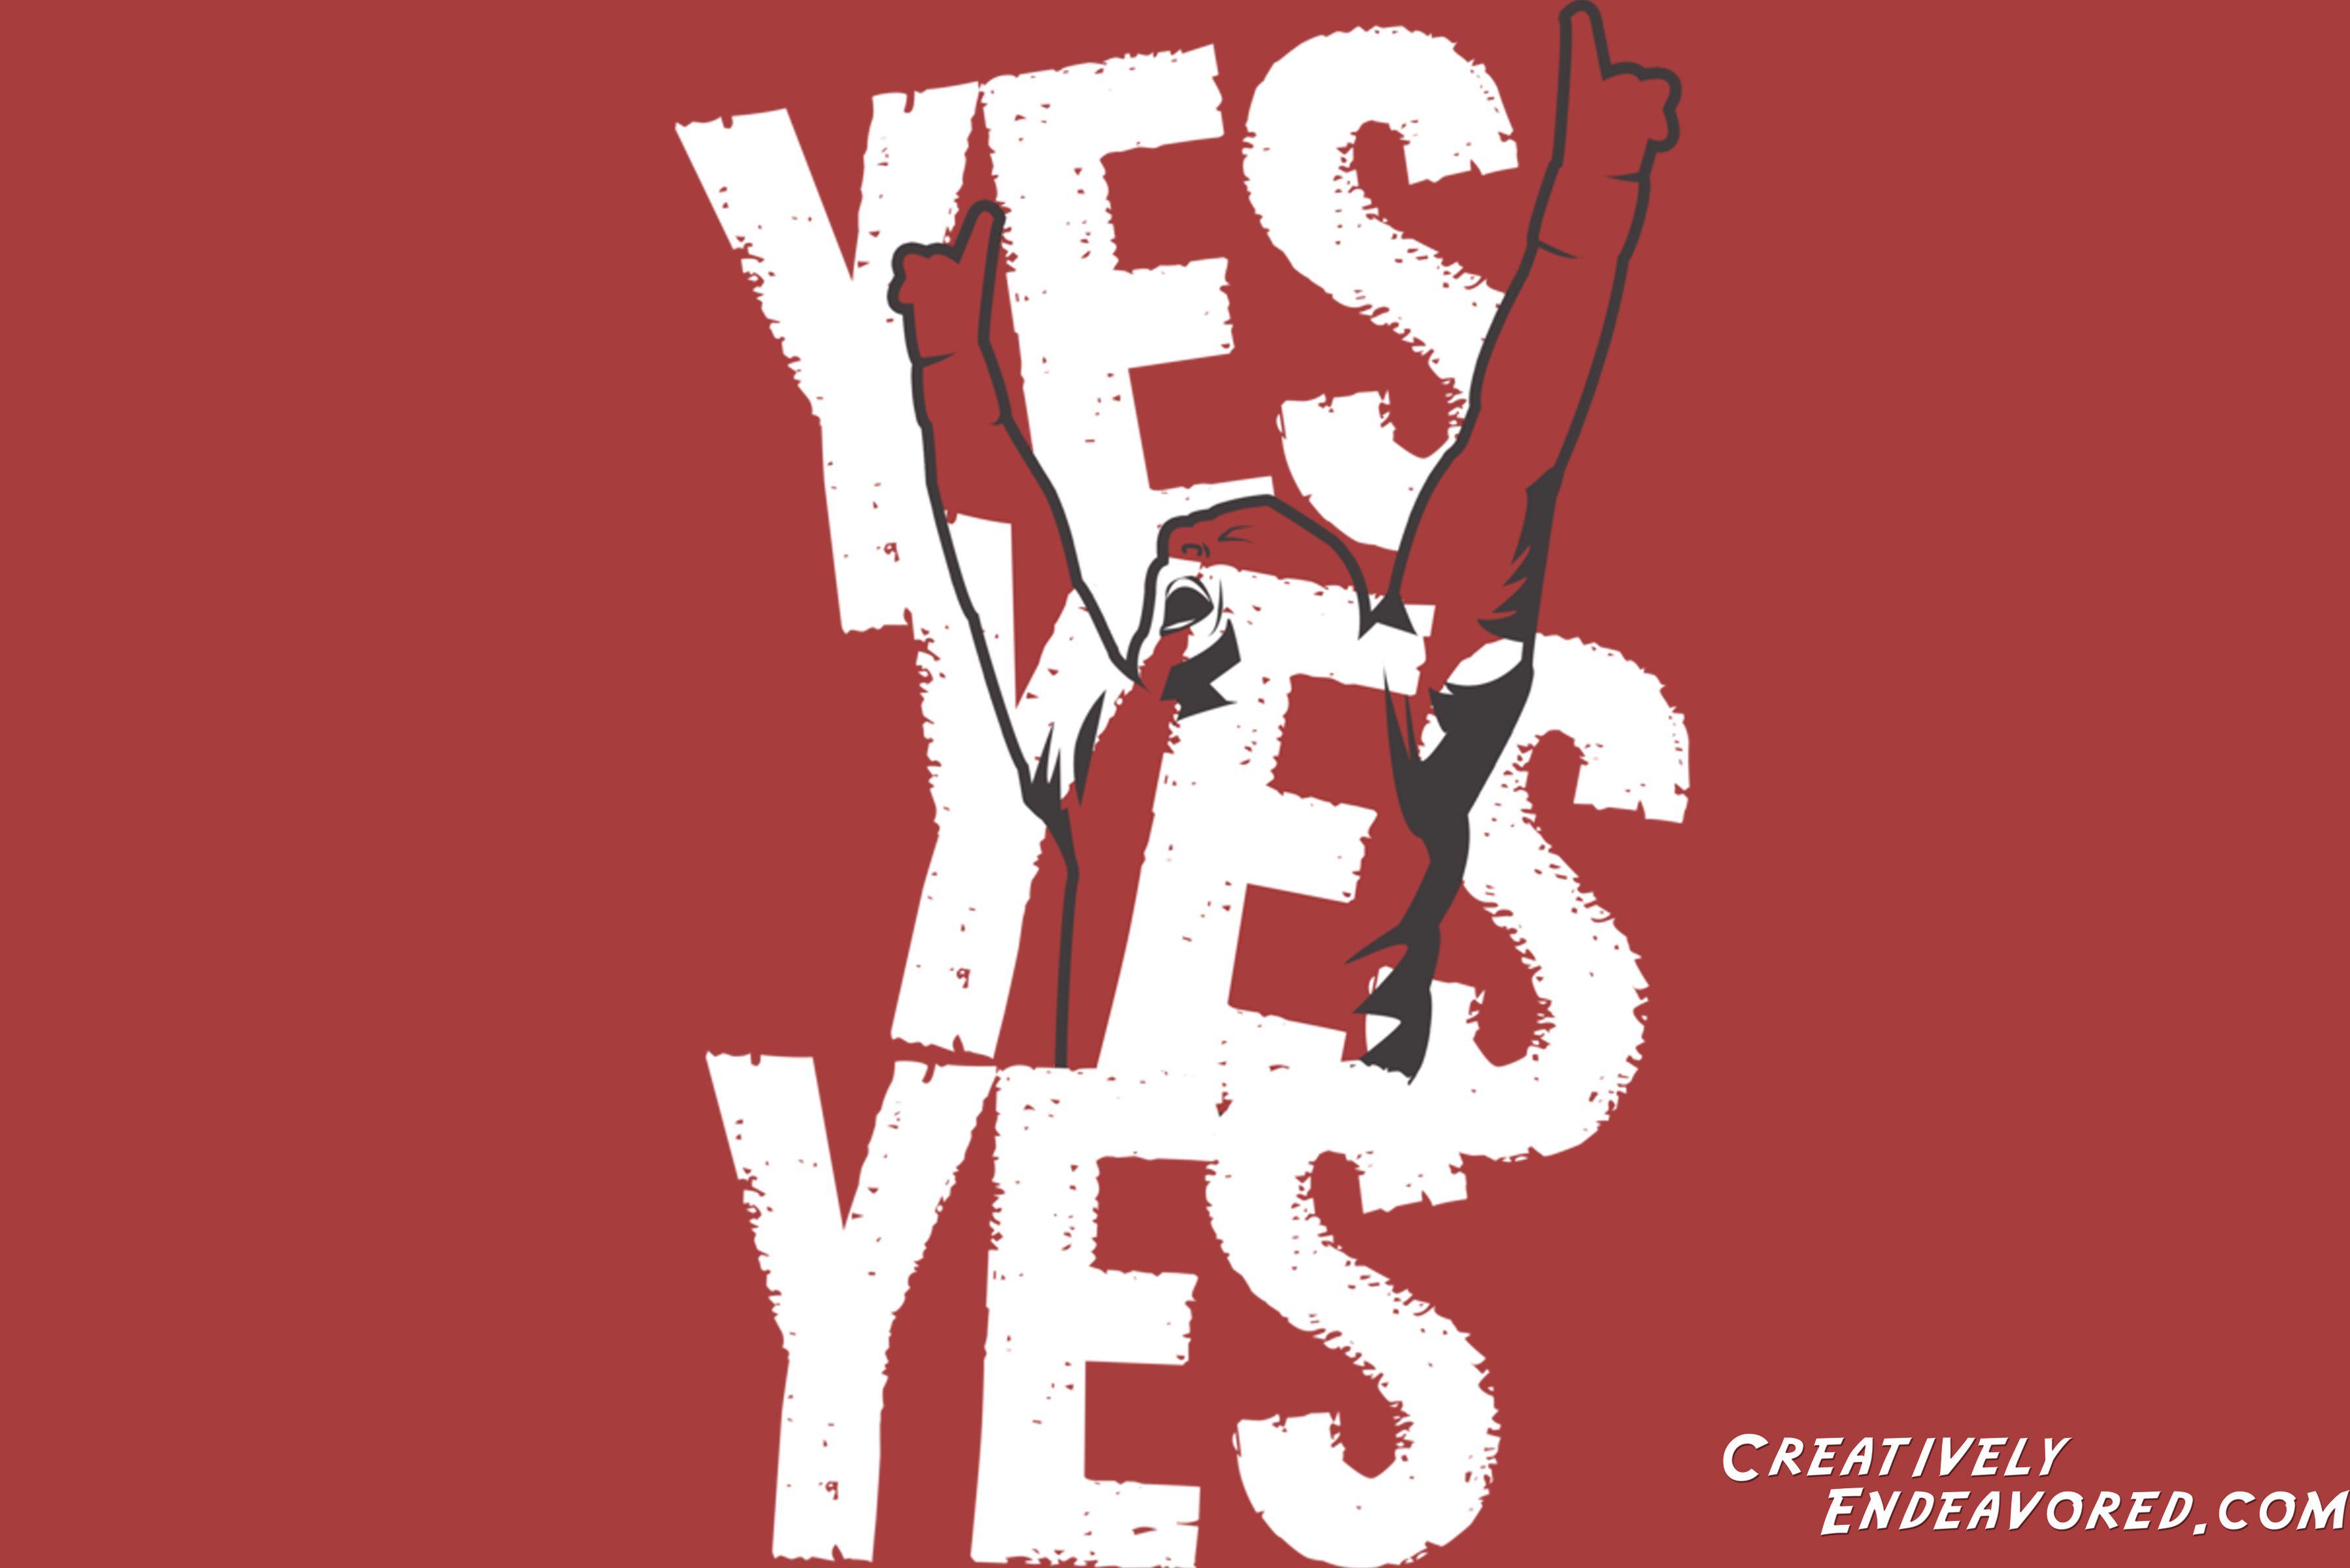 Wallpaper Wednesday: Daniel Bryan “YES! YES! YES!” Wallpaper